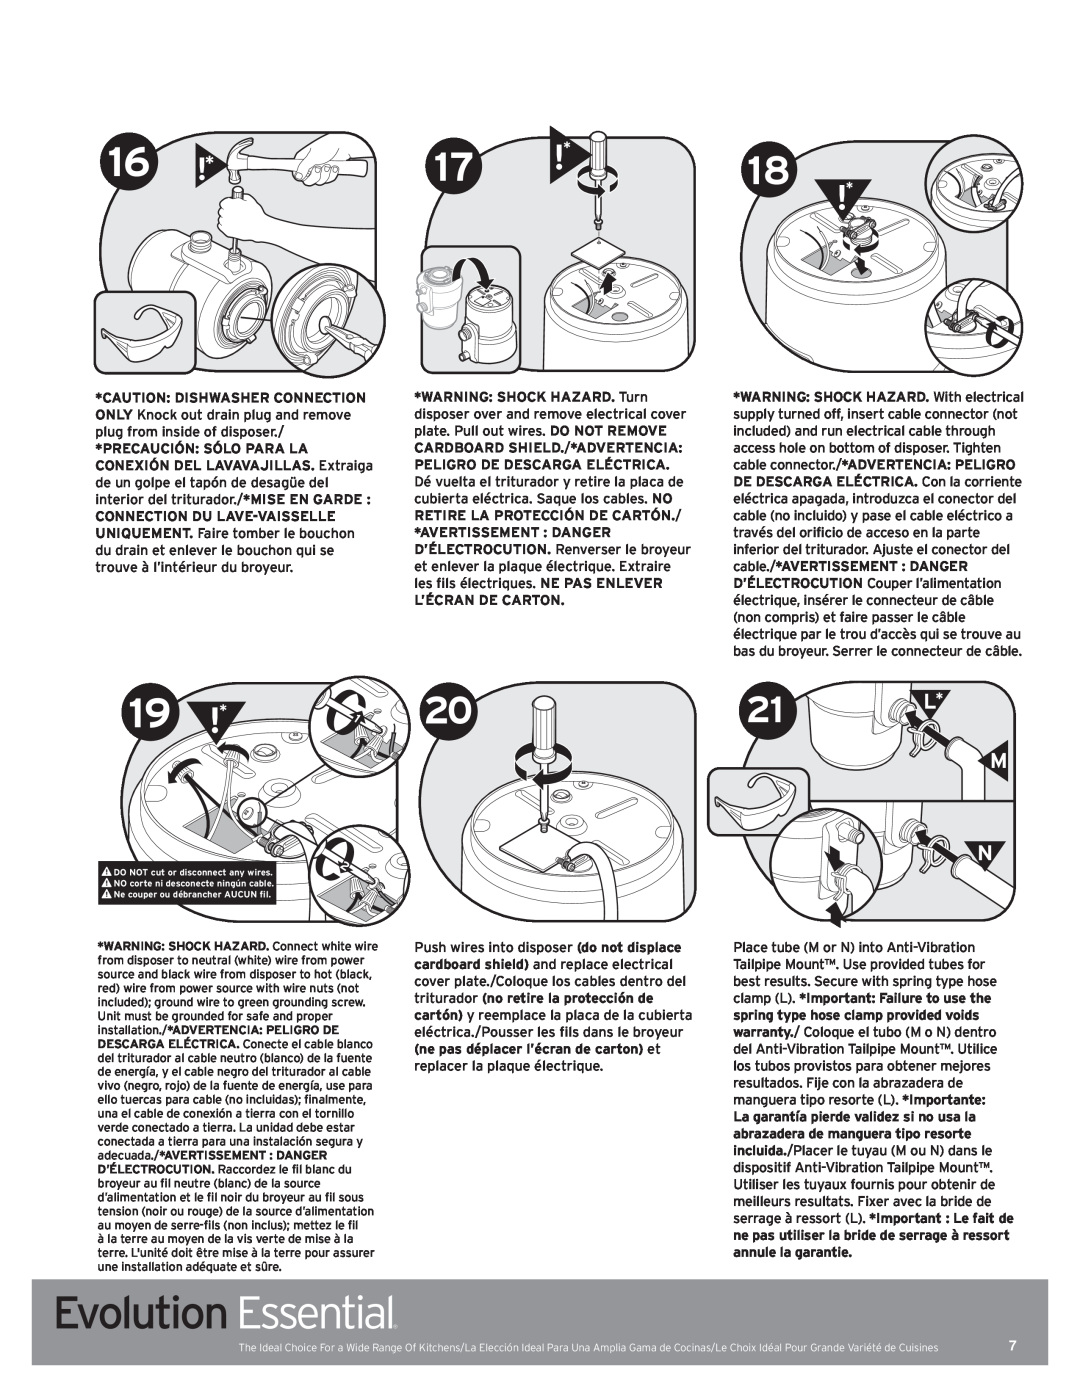 InSinkErator Evolution Essential manual 